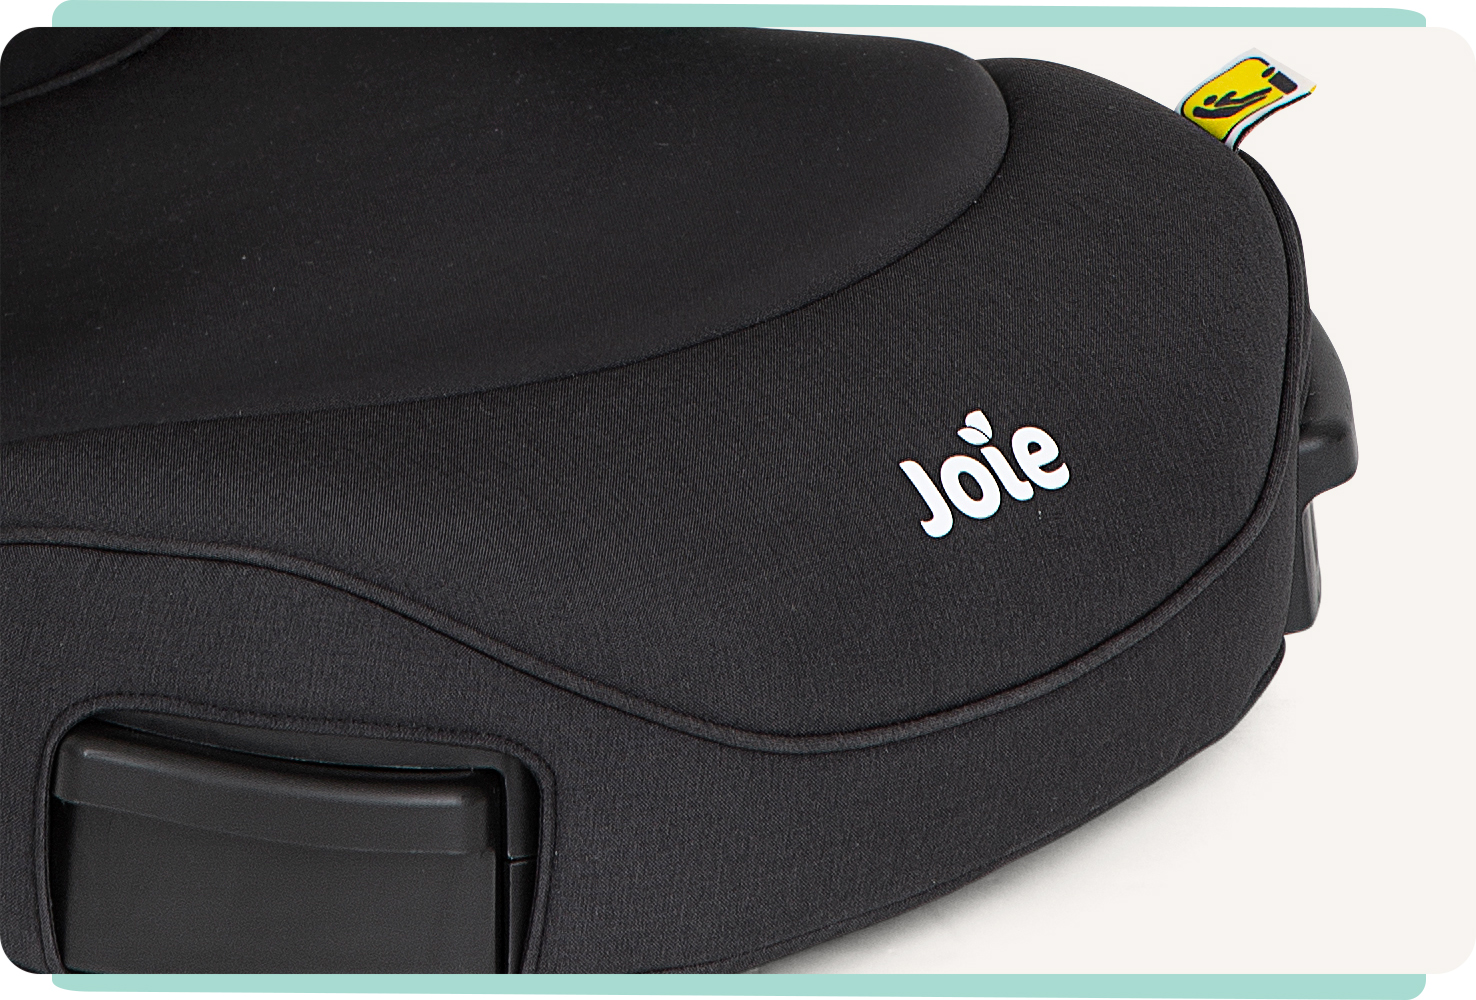  Closeup black Joie i-Trillo FX seat cushion.